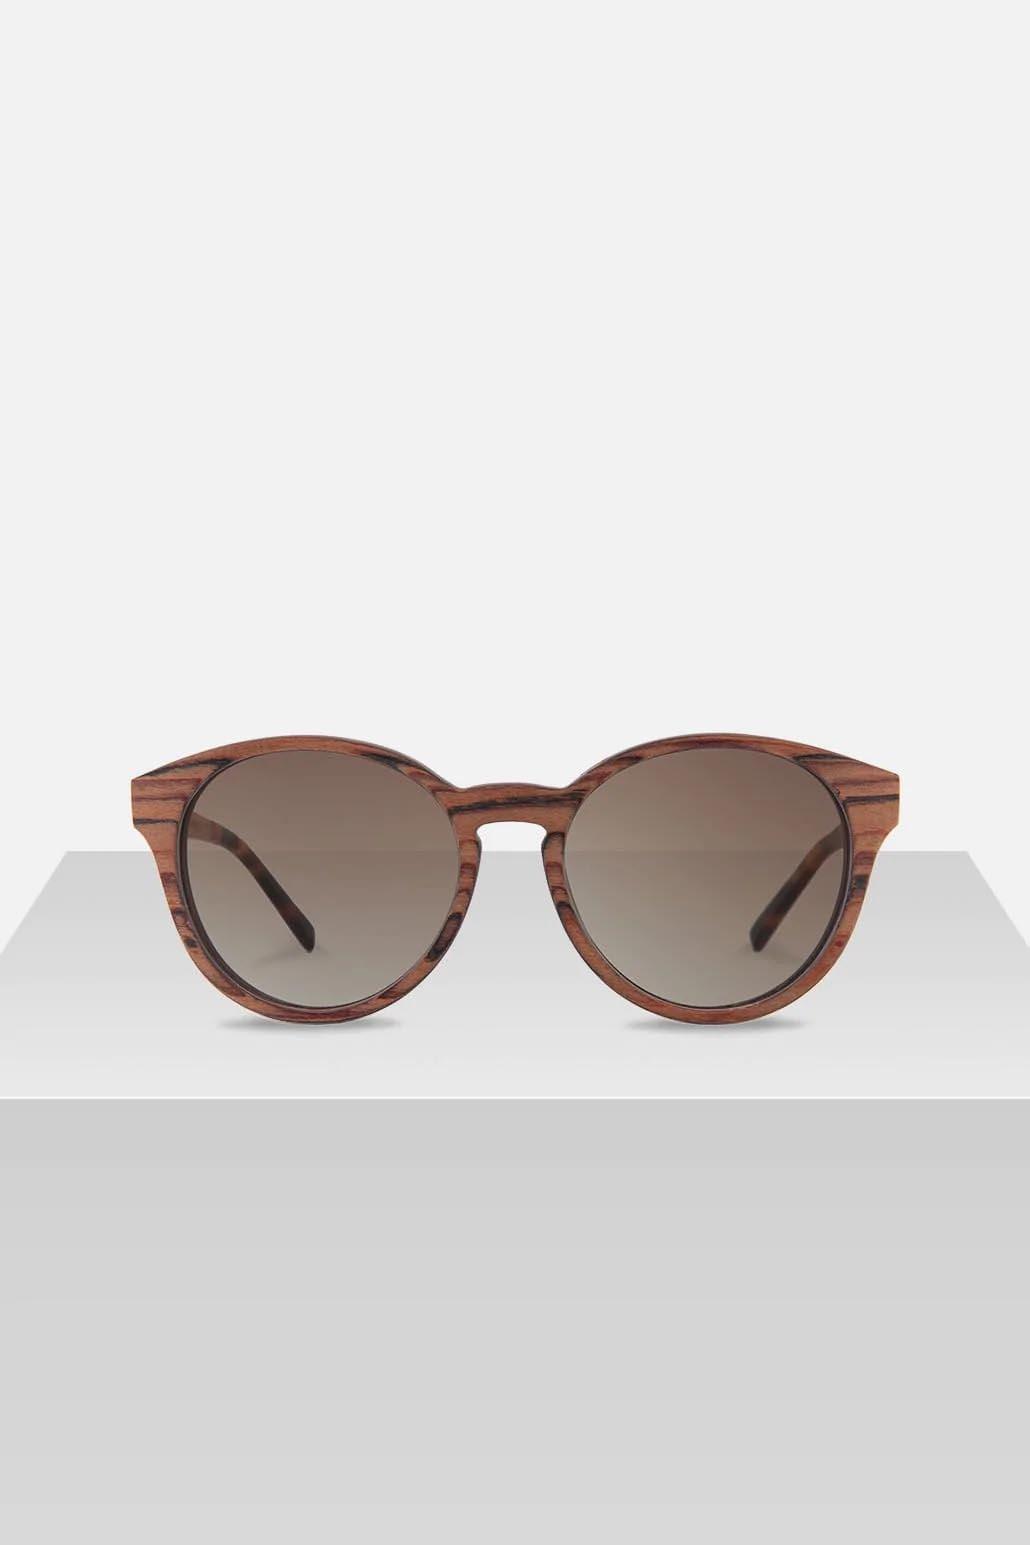 Buy wooden sunglasses